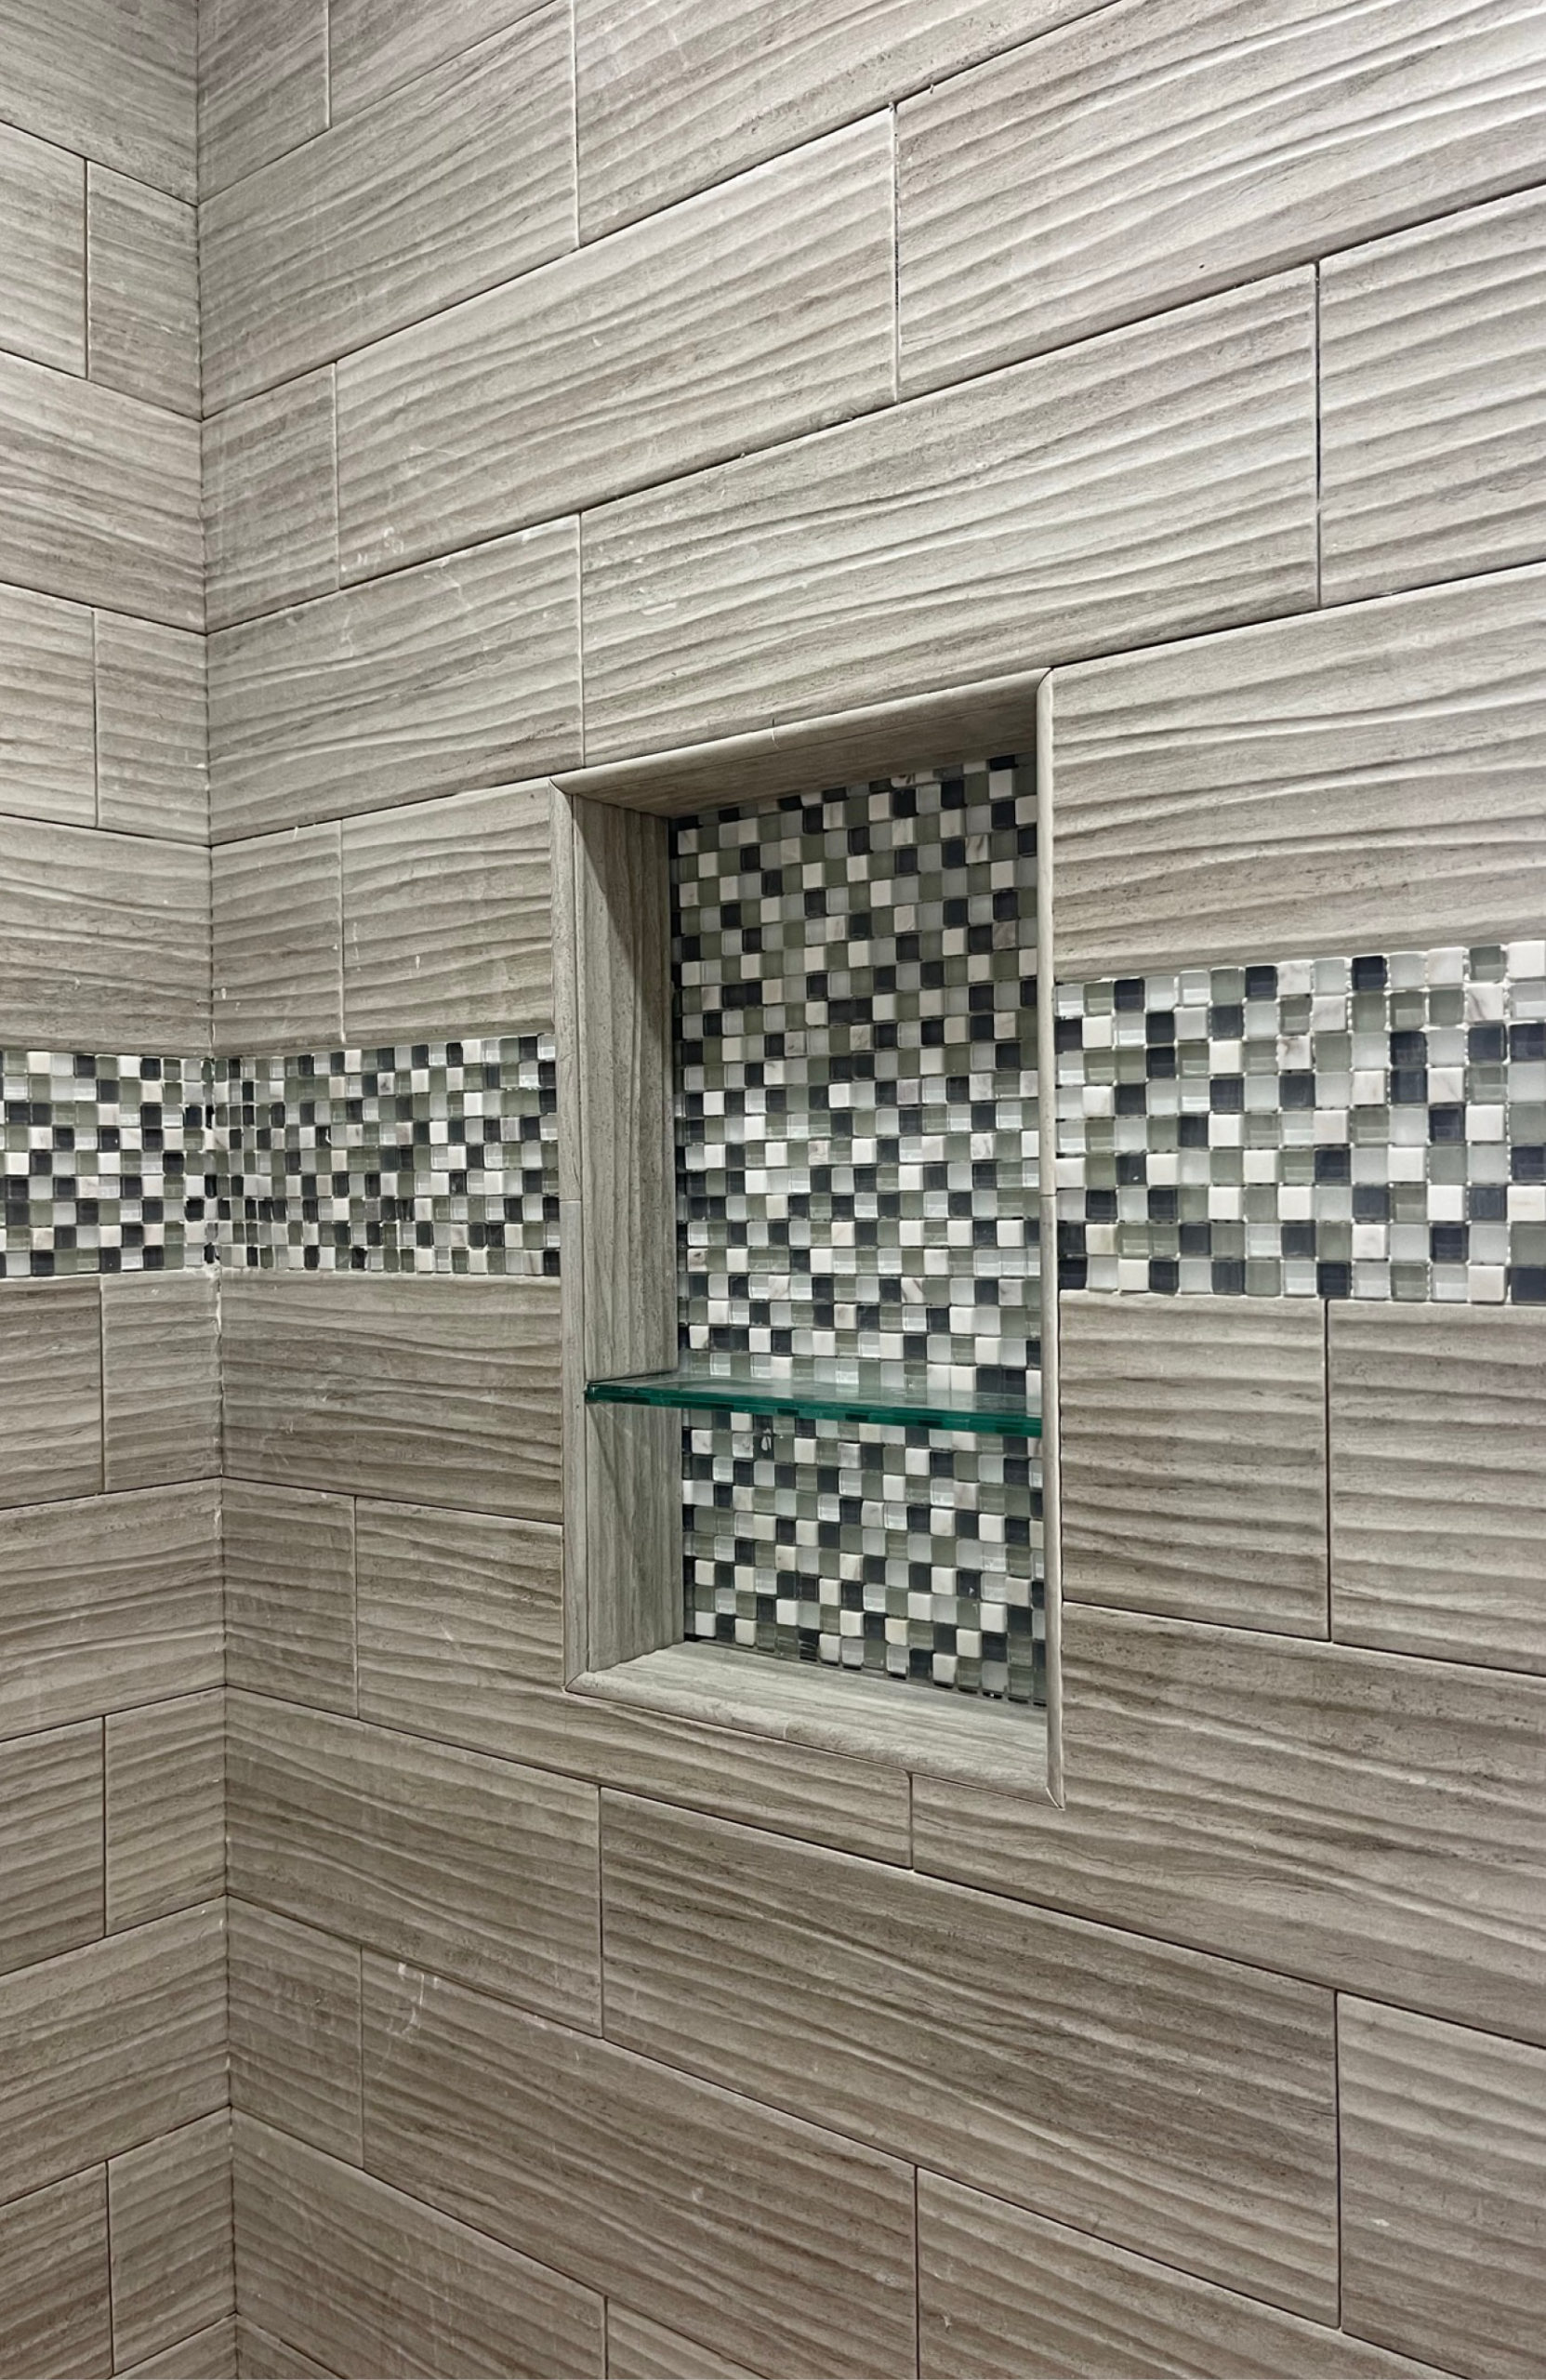 Bathroom Tile installed by Blue's Flooring in Sulphur, Louisiana